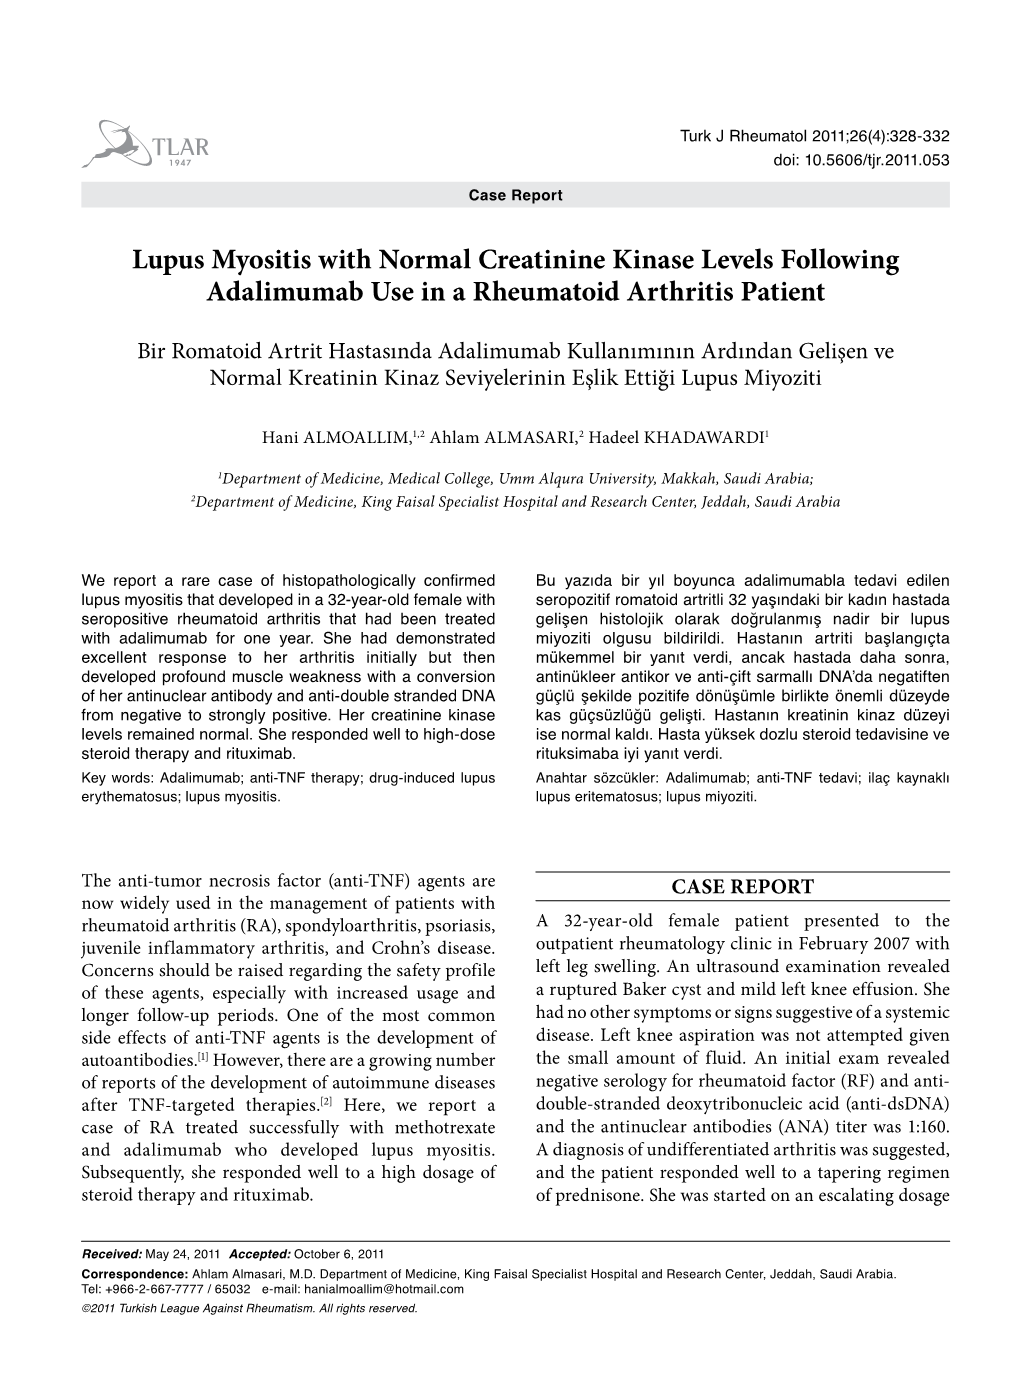 Lupus Myositis with Normal Creatinine Kinase Levels Following Adalimumab Use in a Rheumatoid Arthritis Patient